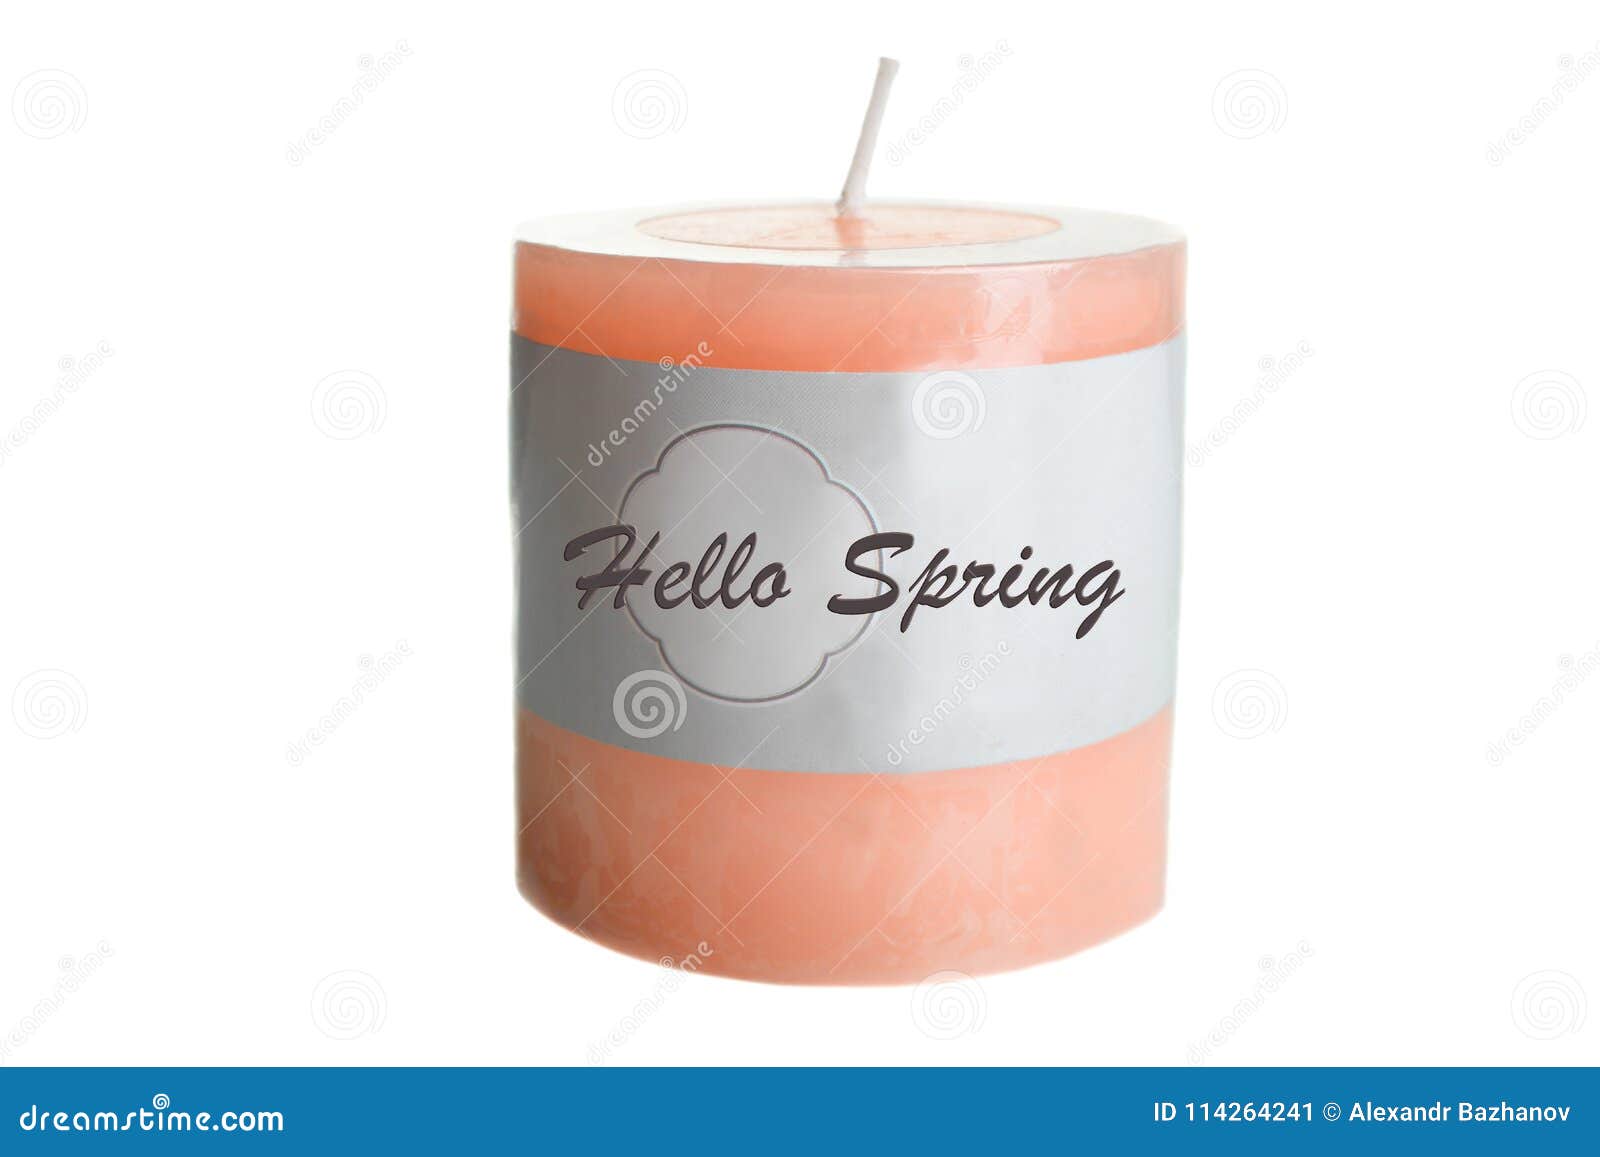 One Beautiful Aromatic Candle Stock Image - Image of decorative ...